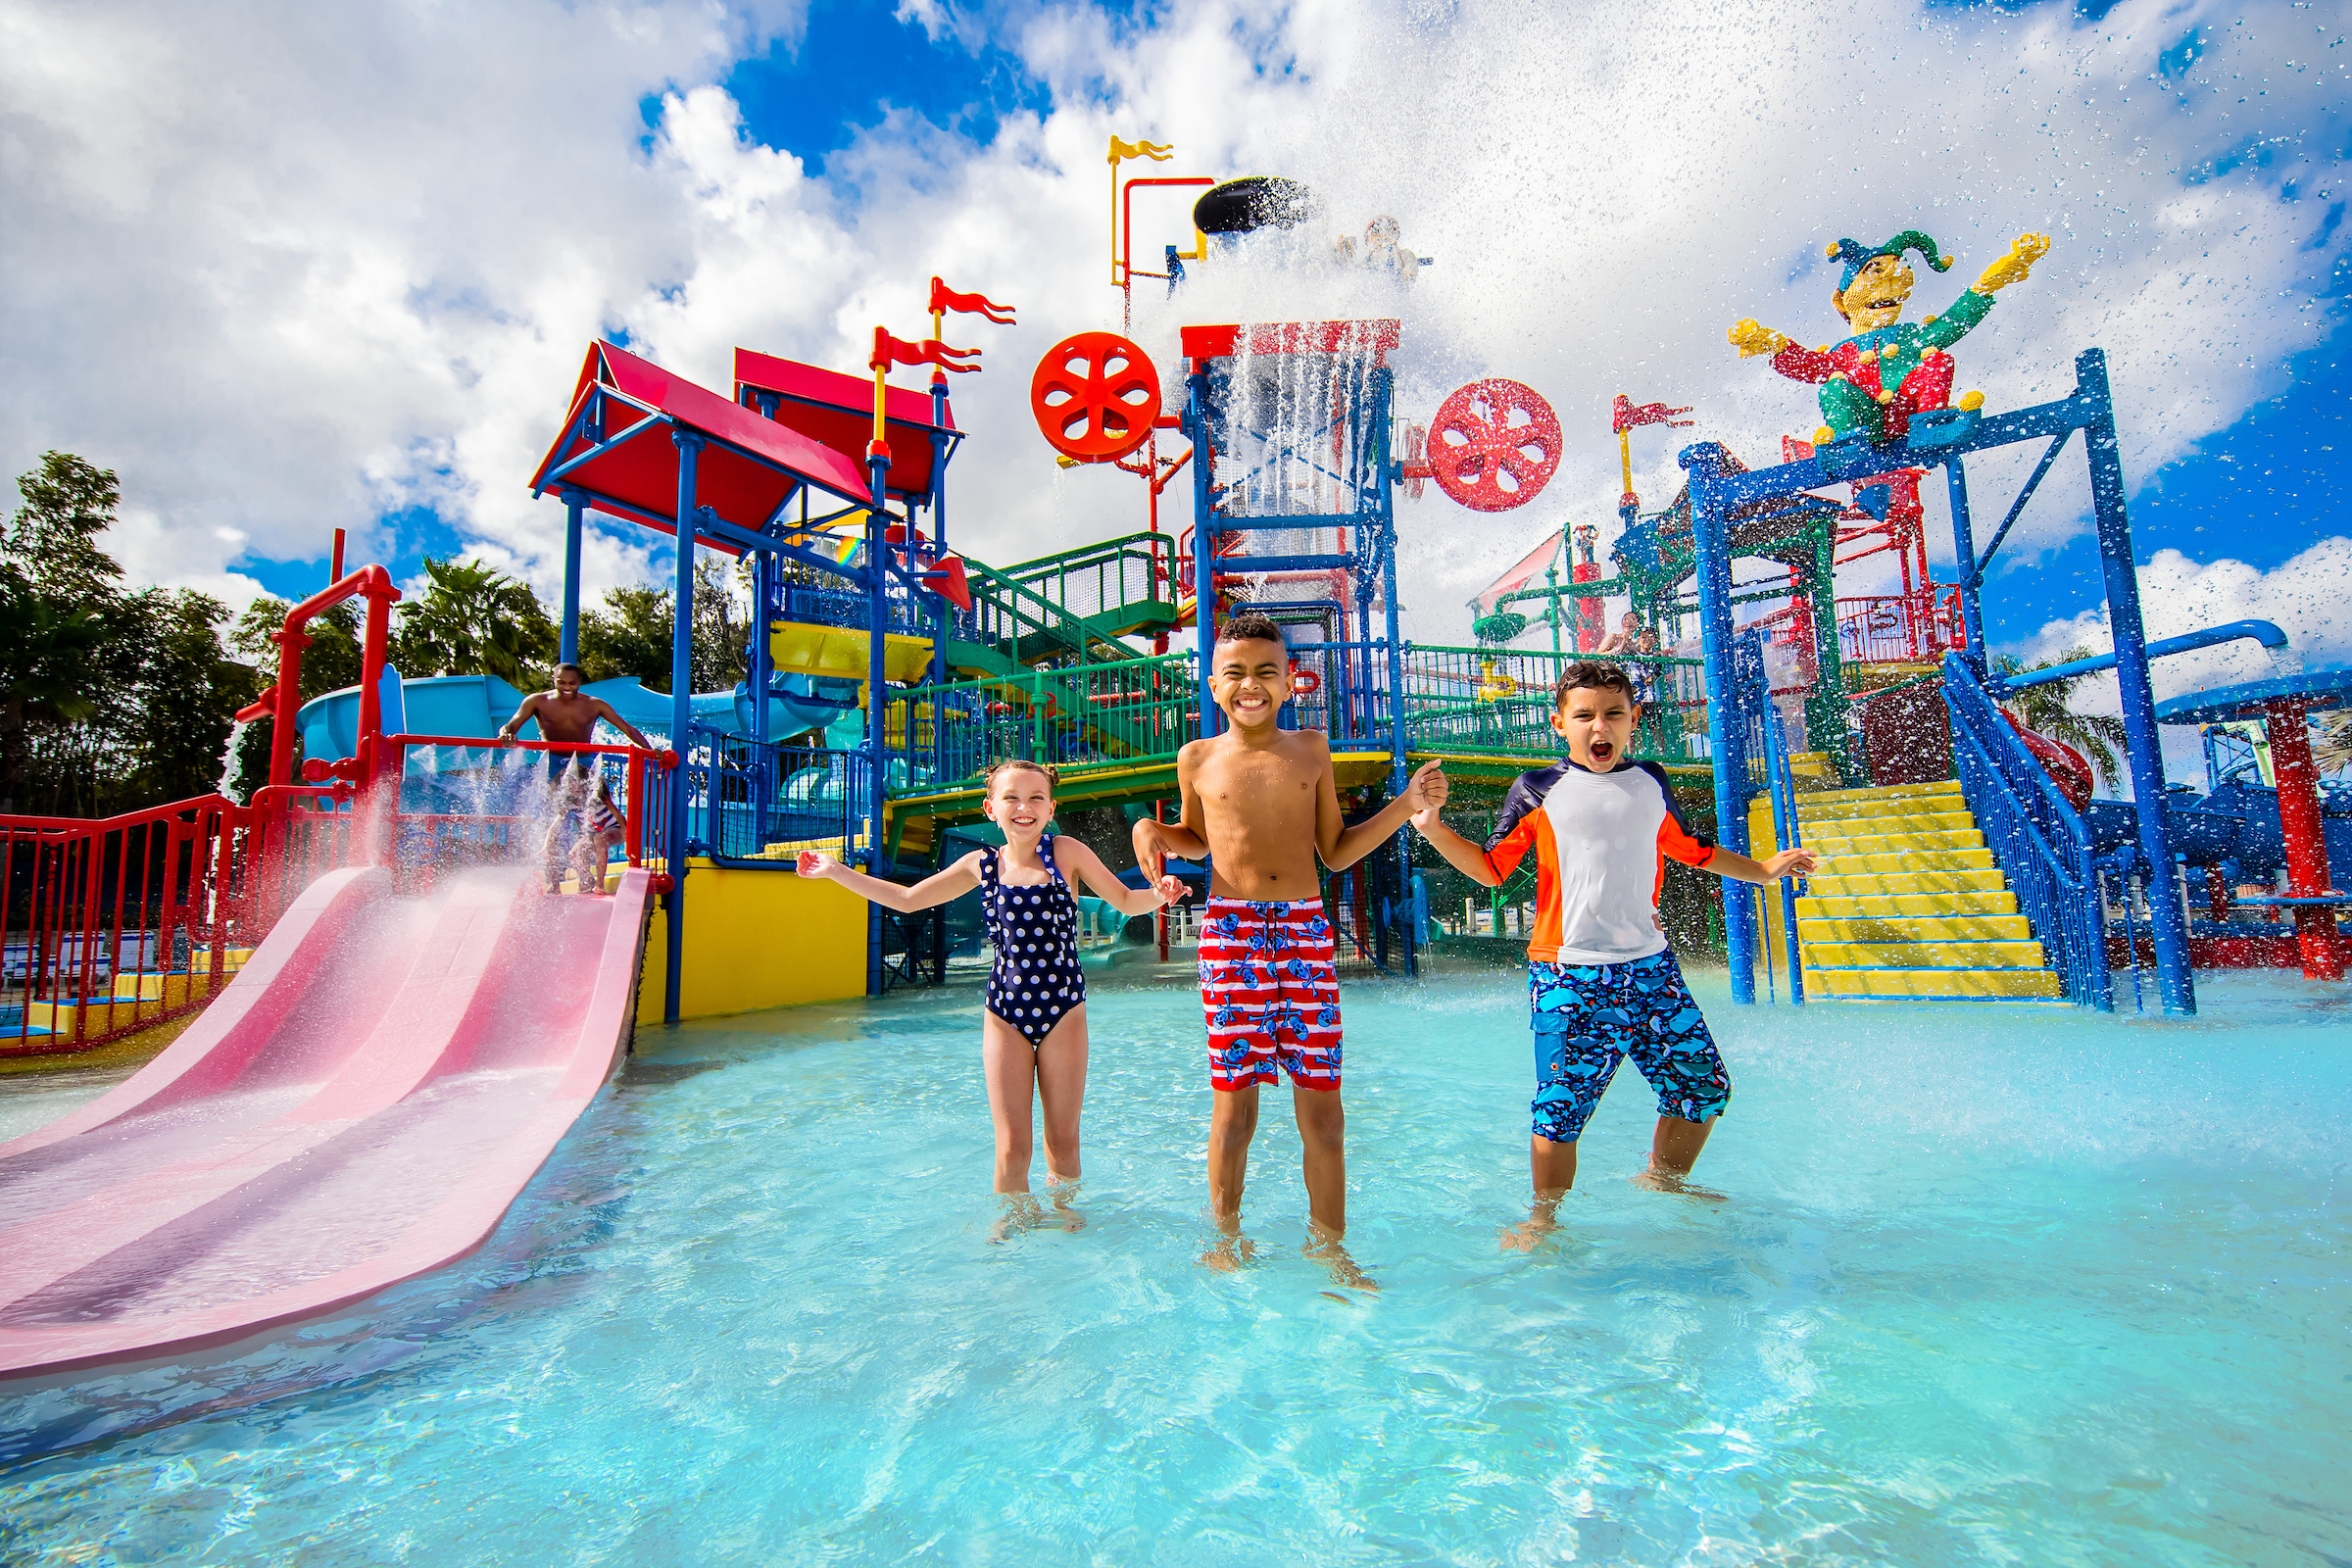 Florida Legoland waterpark